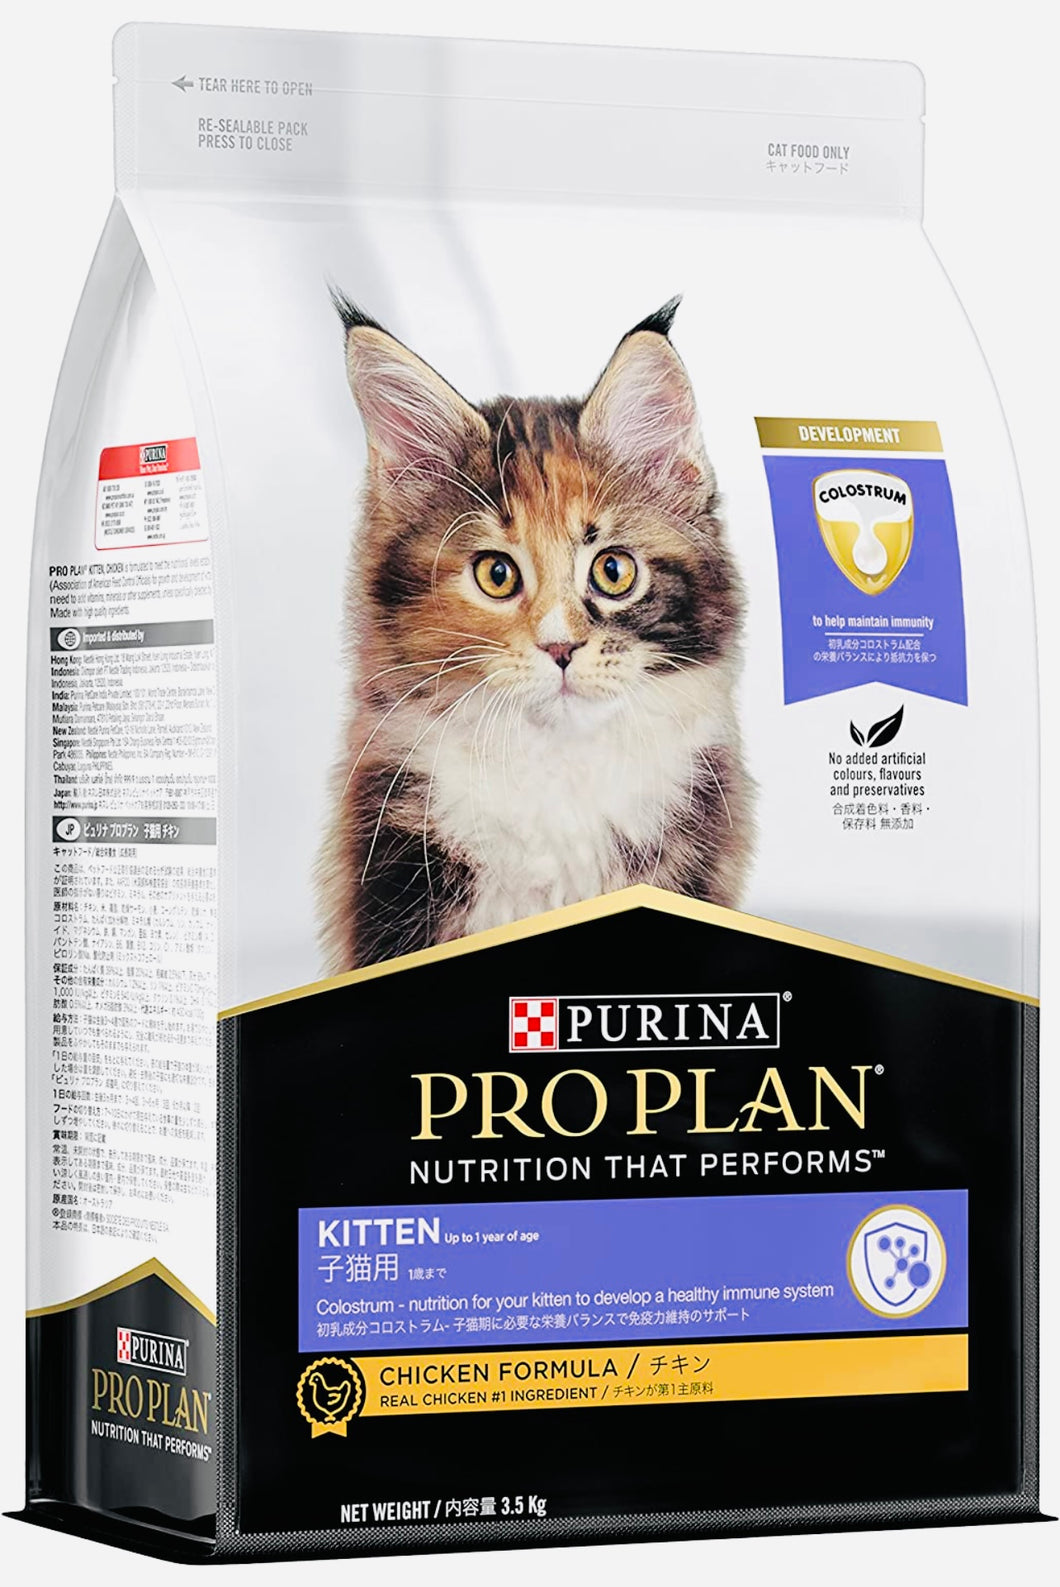 Purina pro plan chicken formula dry kitten food 3.5kg